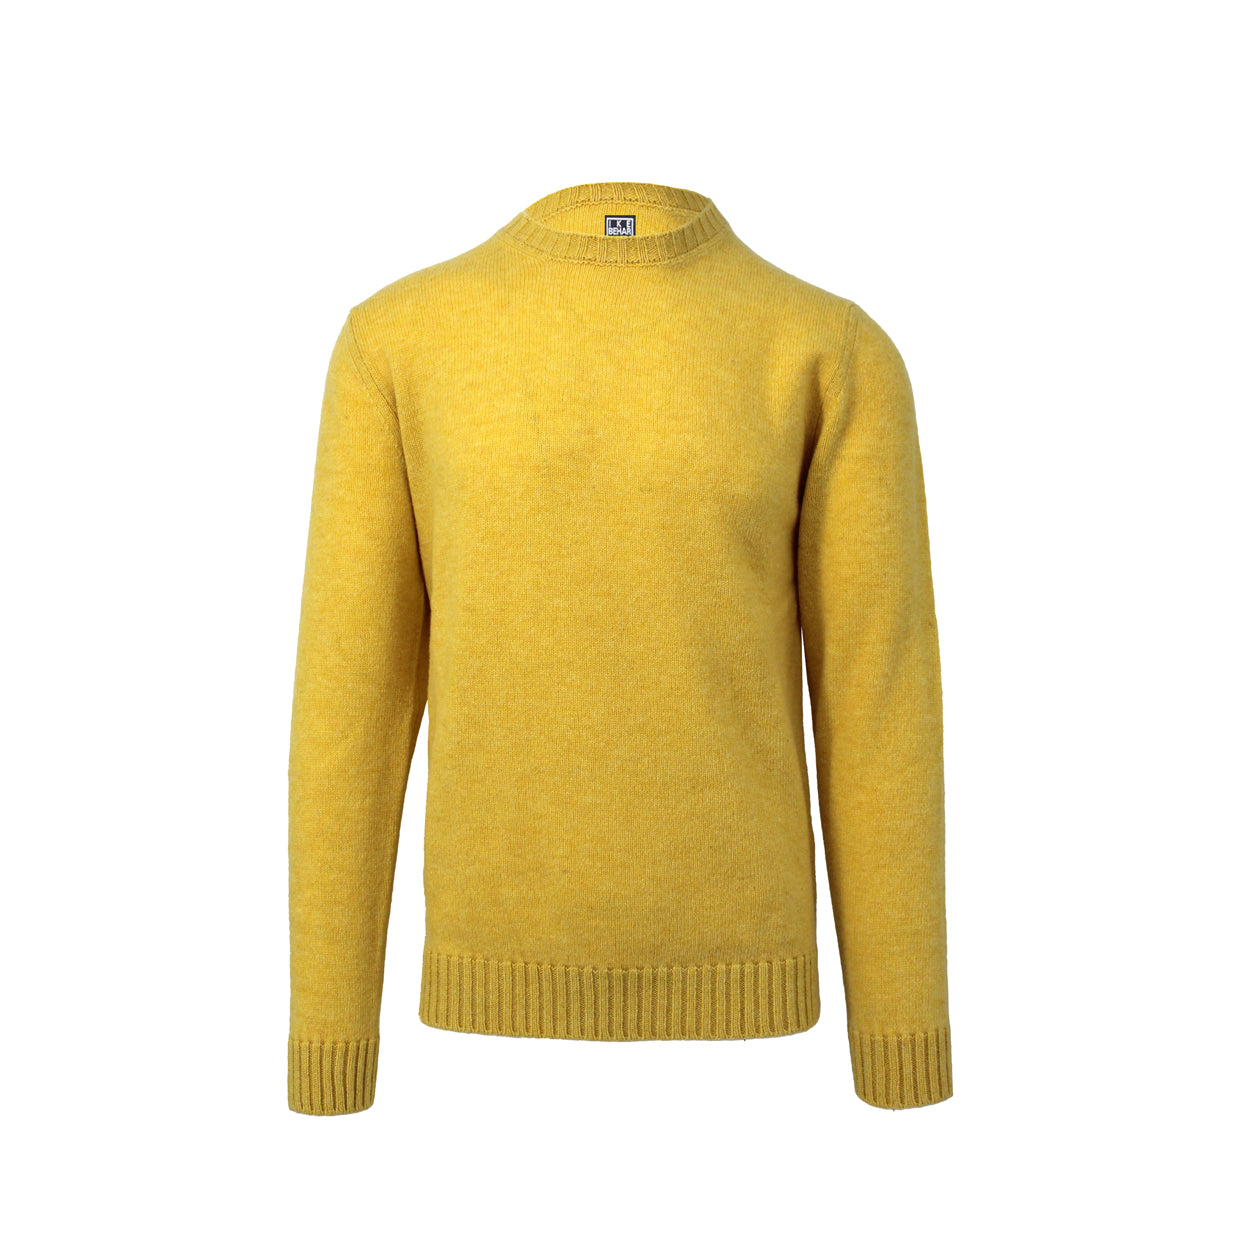 Canary Yellow Crewneck Sweater